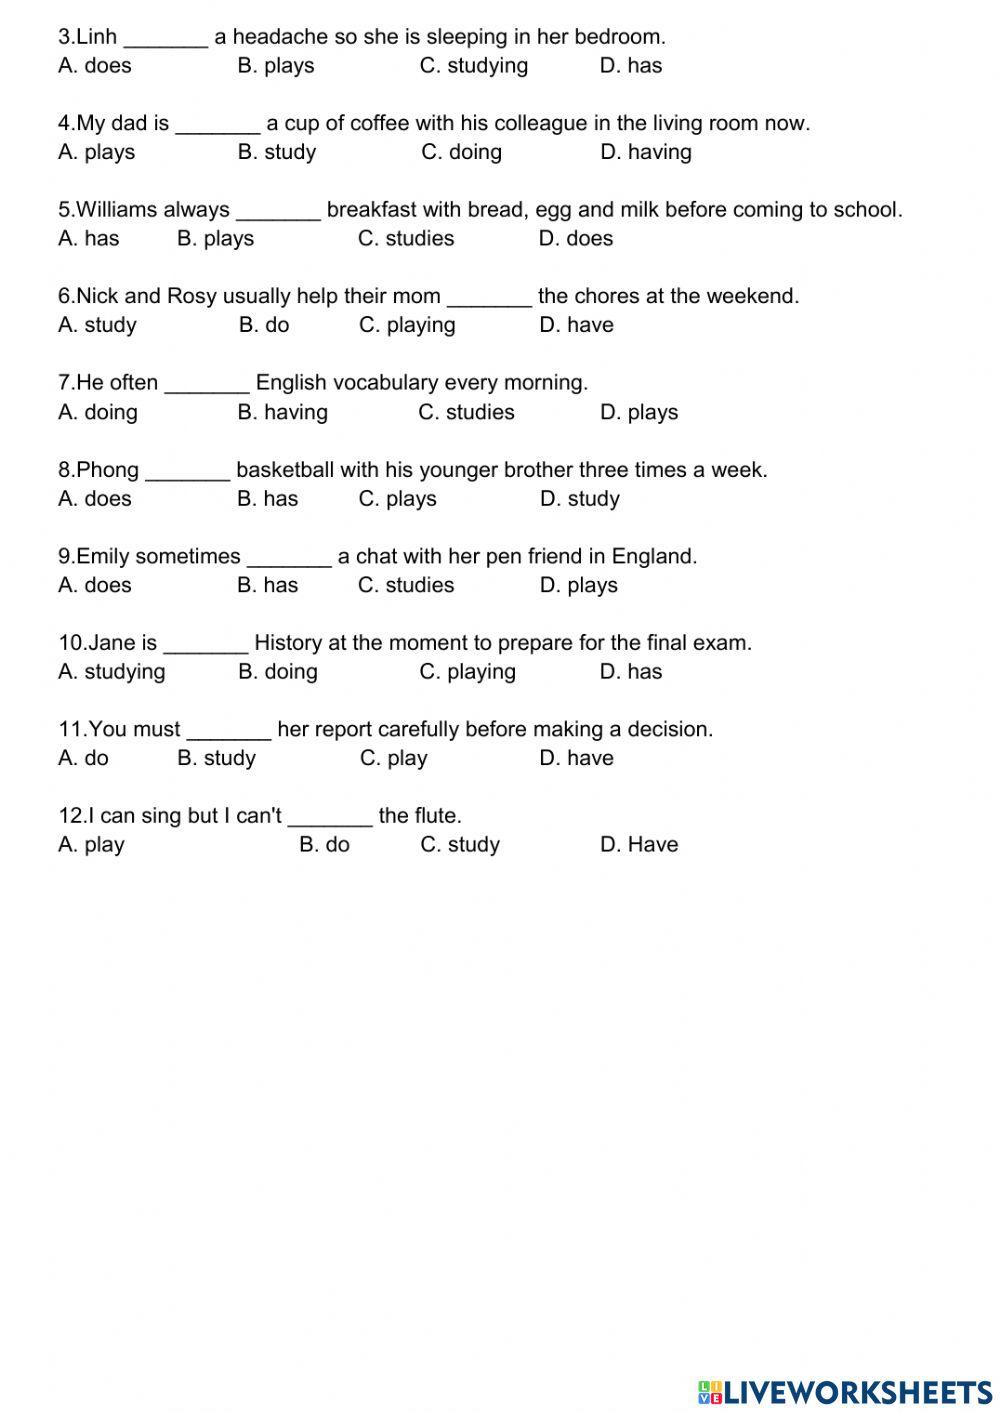 English 6 - Unit 1 Vocabulary play-do-have-study